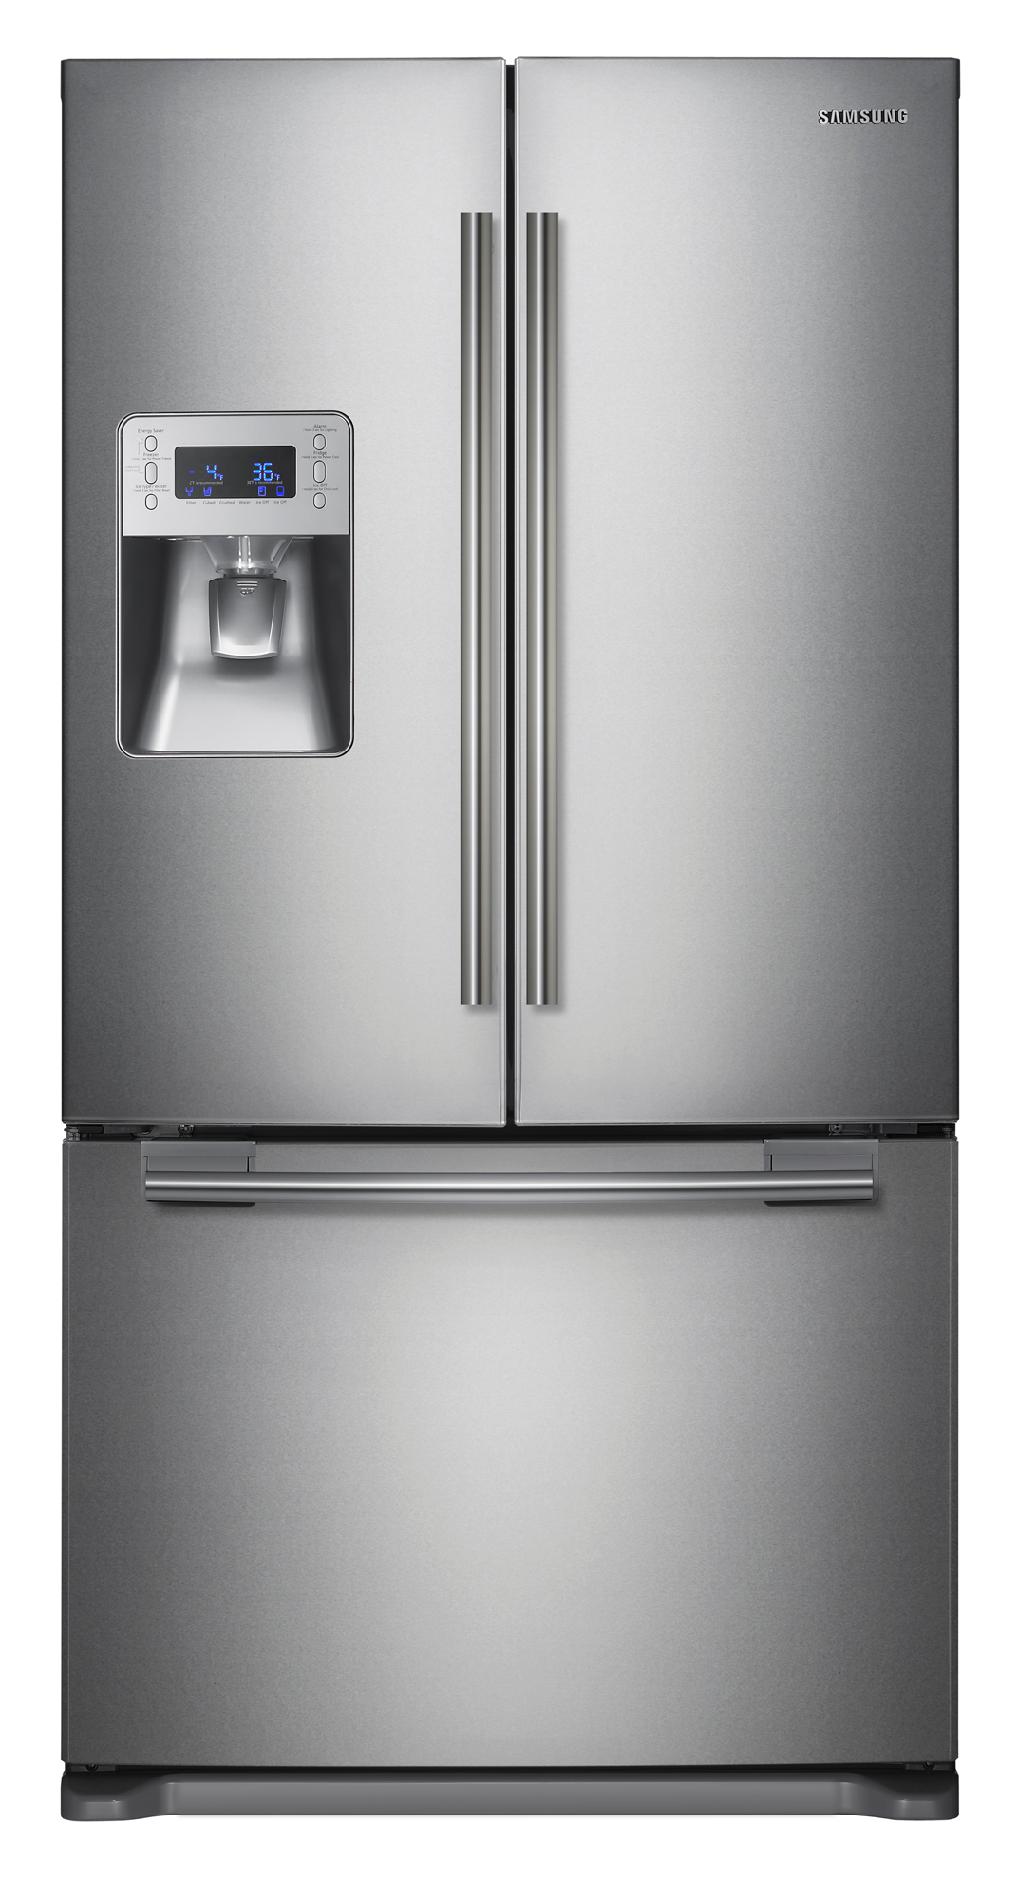 Samsung 26 cu. ft. French Door Refrigerator - Stainless Platinum